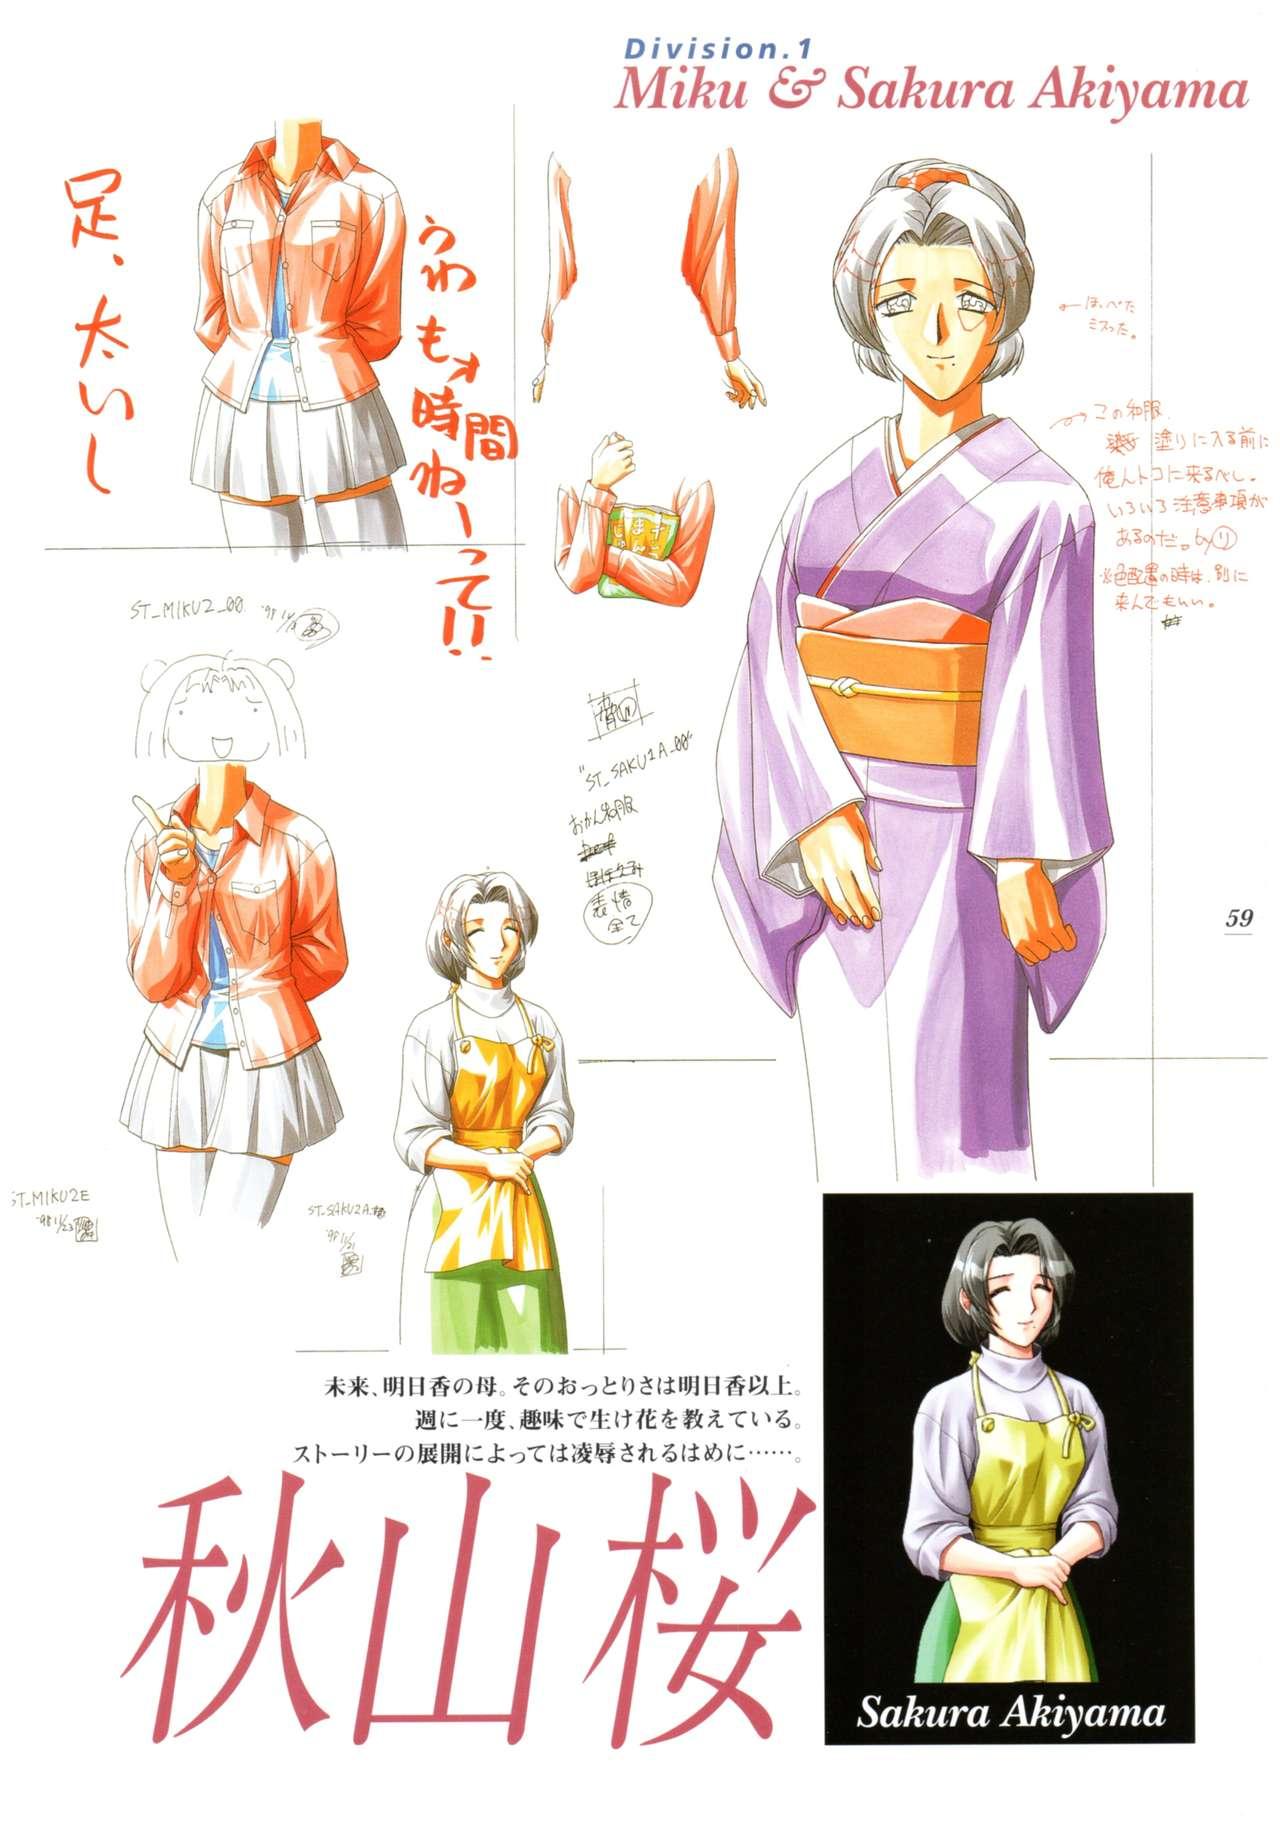 Kyouhaku Owaranai Asu original illustration art book 63